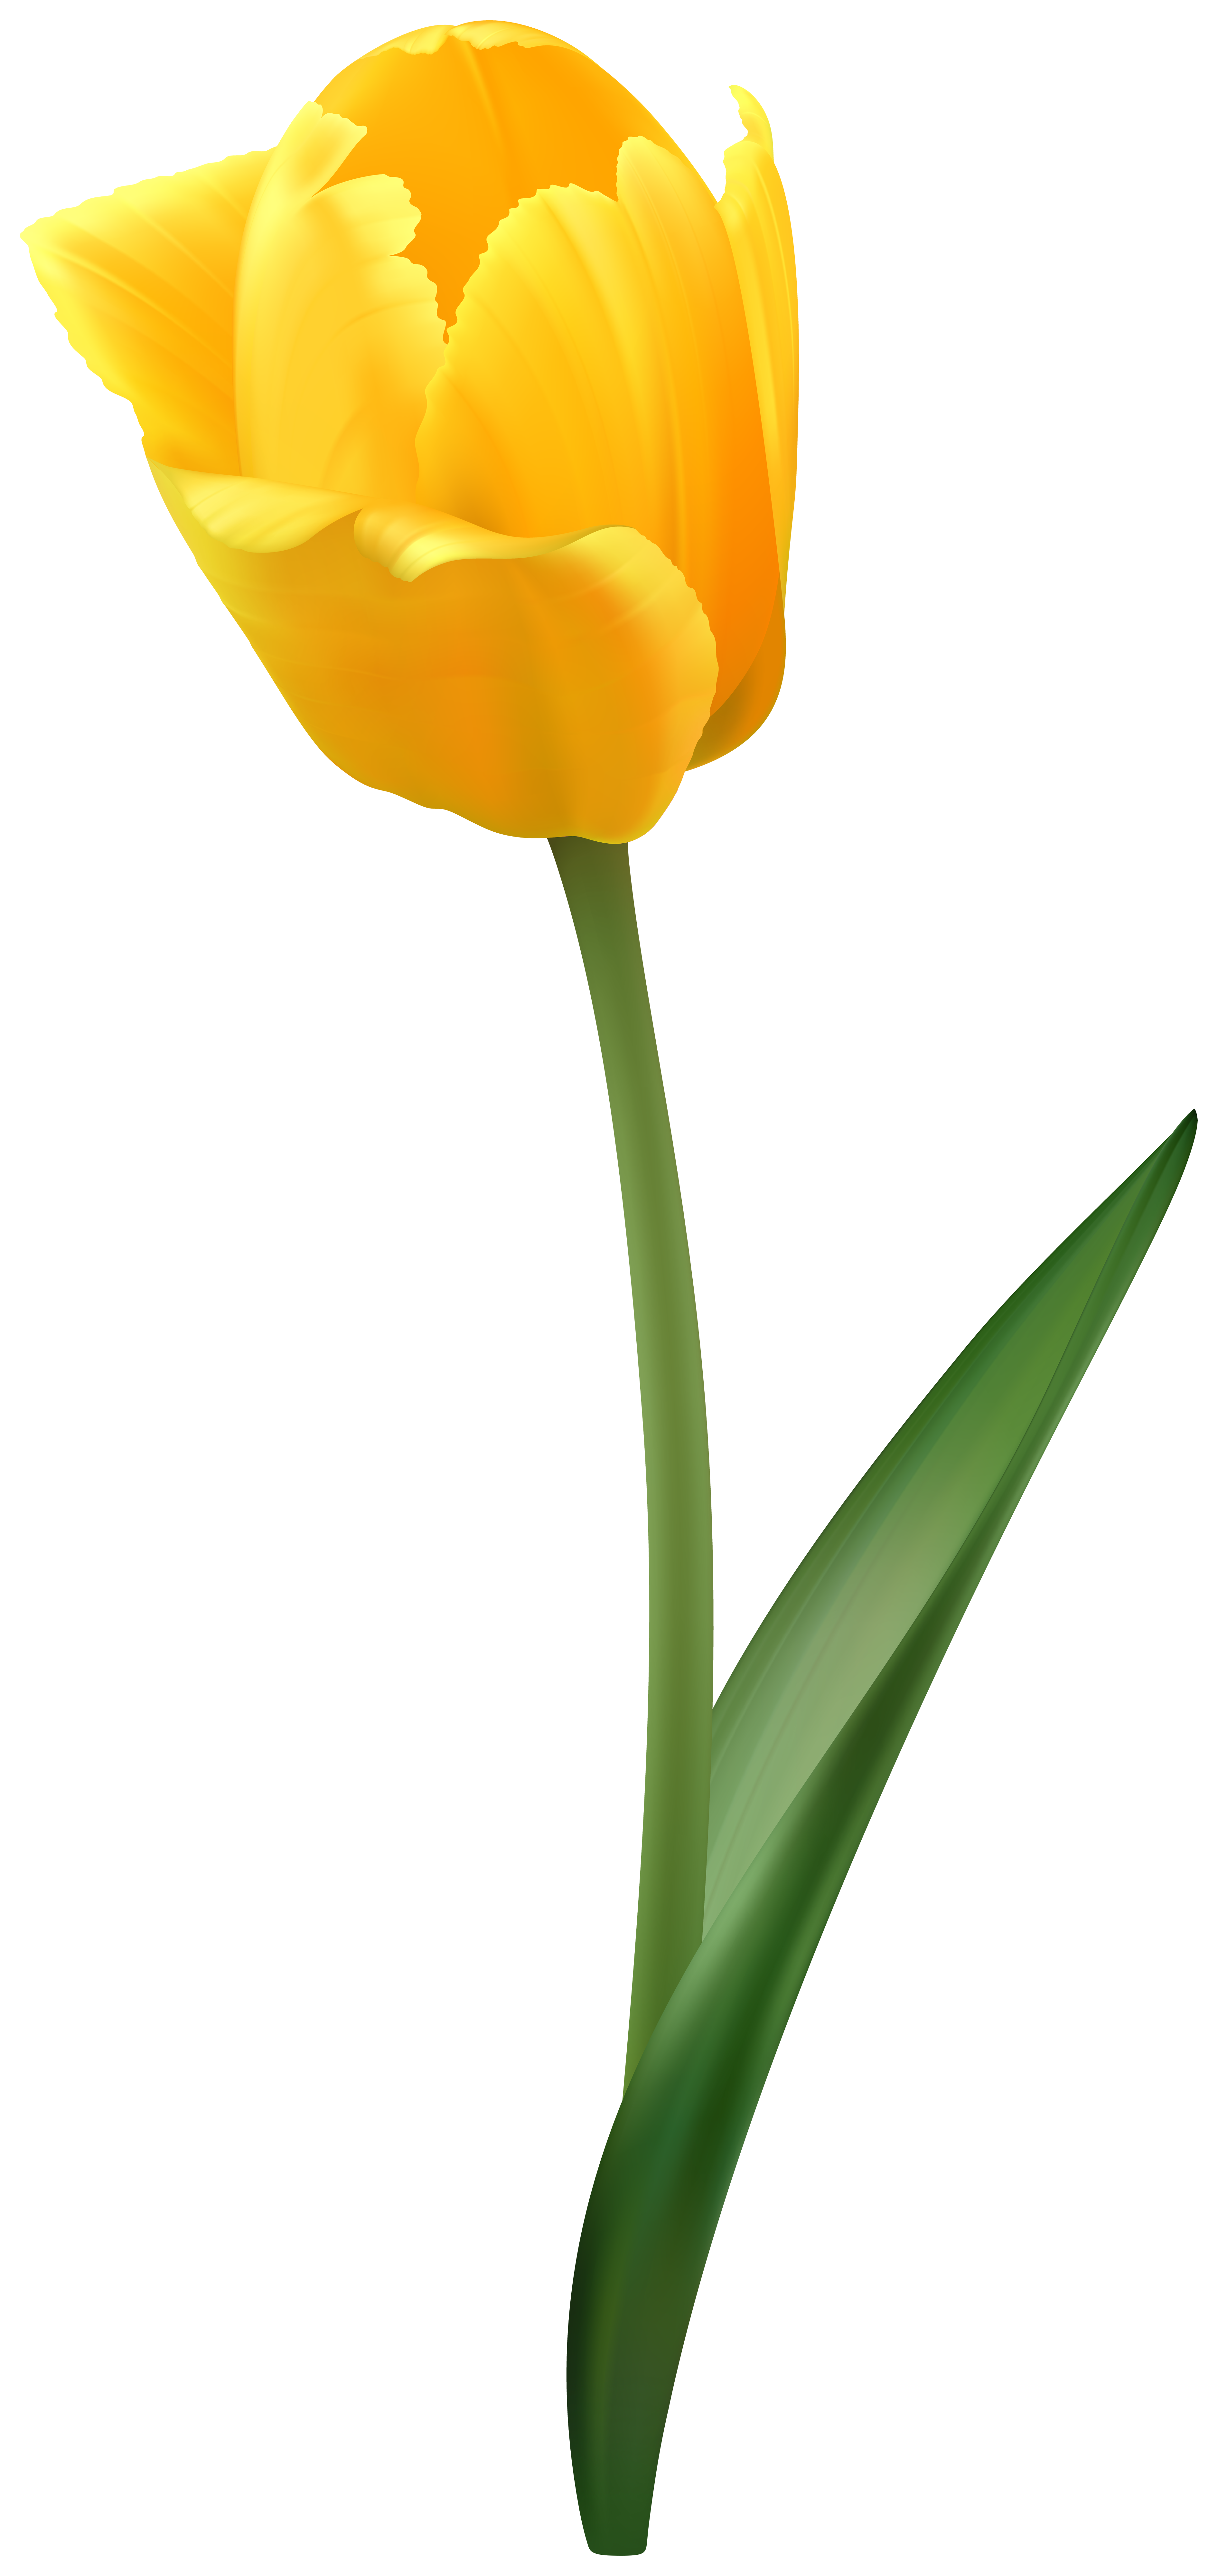 Yellow Tulip Flower Transparent Image | Gallery Yopriceville 